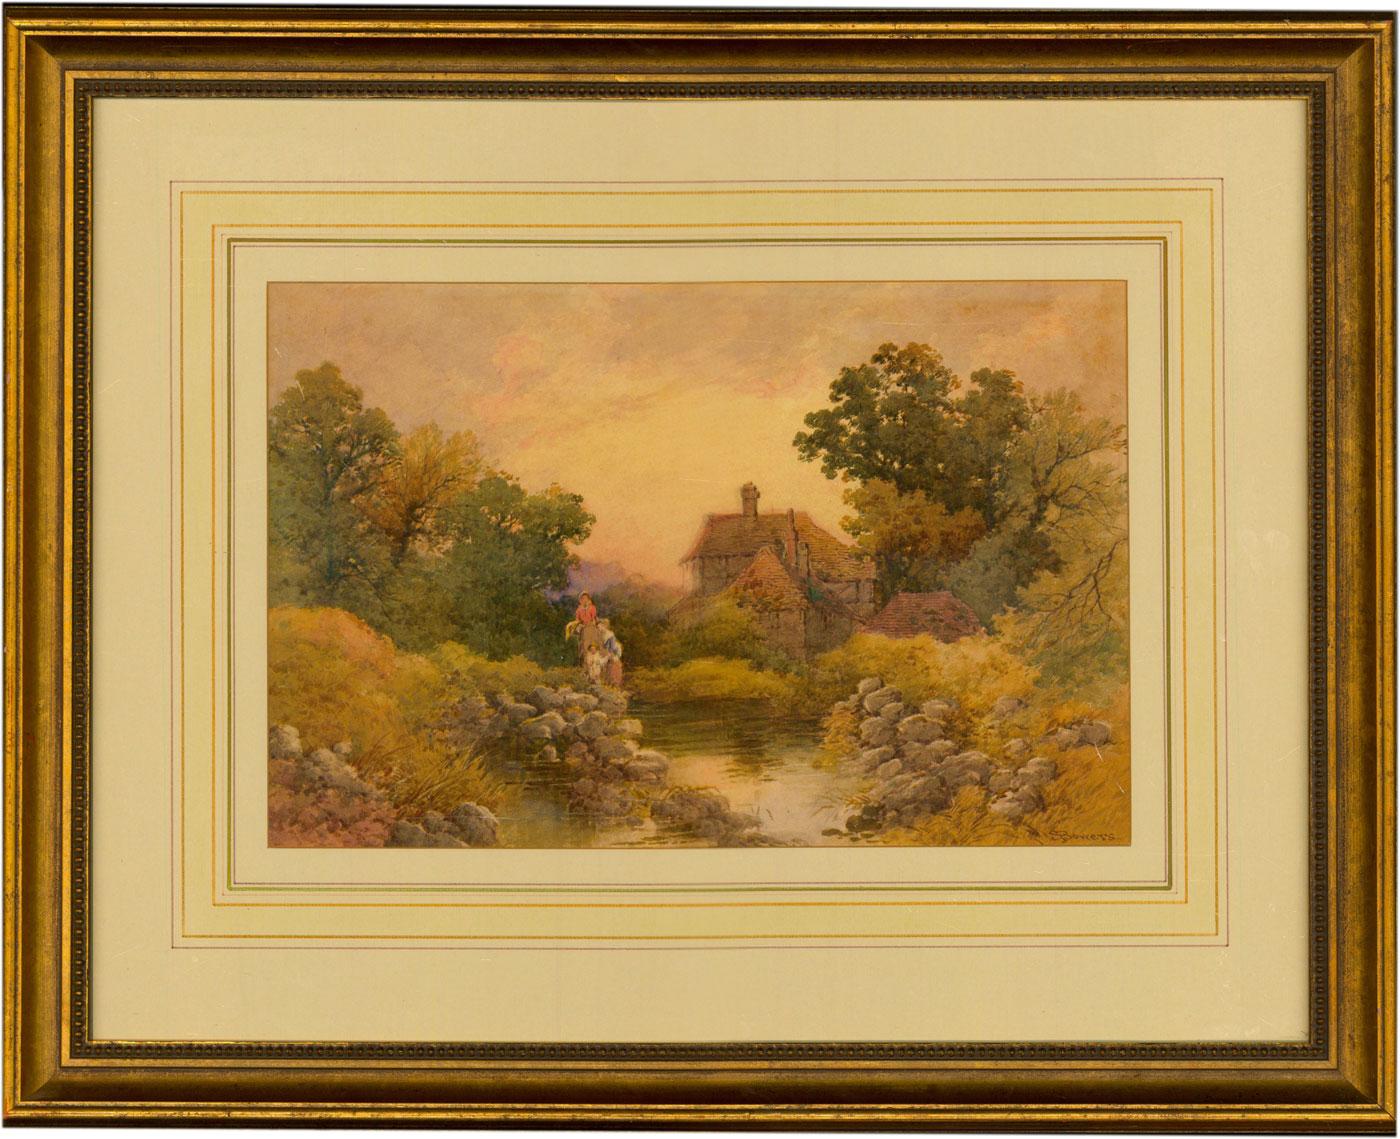 Unknown Landscape Art - Stephen J. Bowers (fl. 1874-1892) - Signed Watercolour, Figures in a Landscape